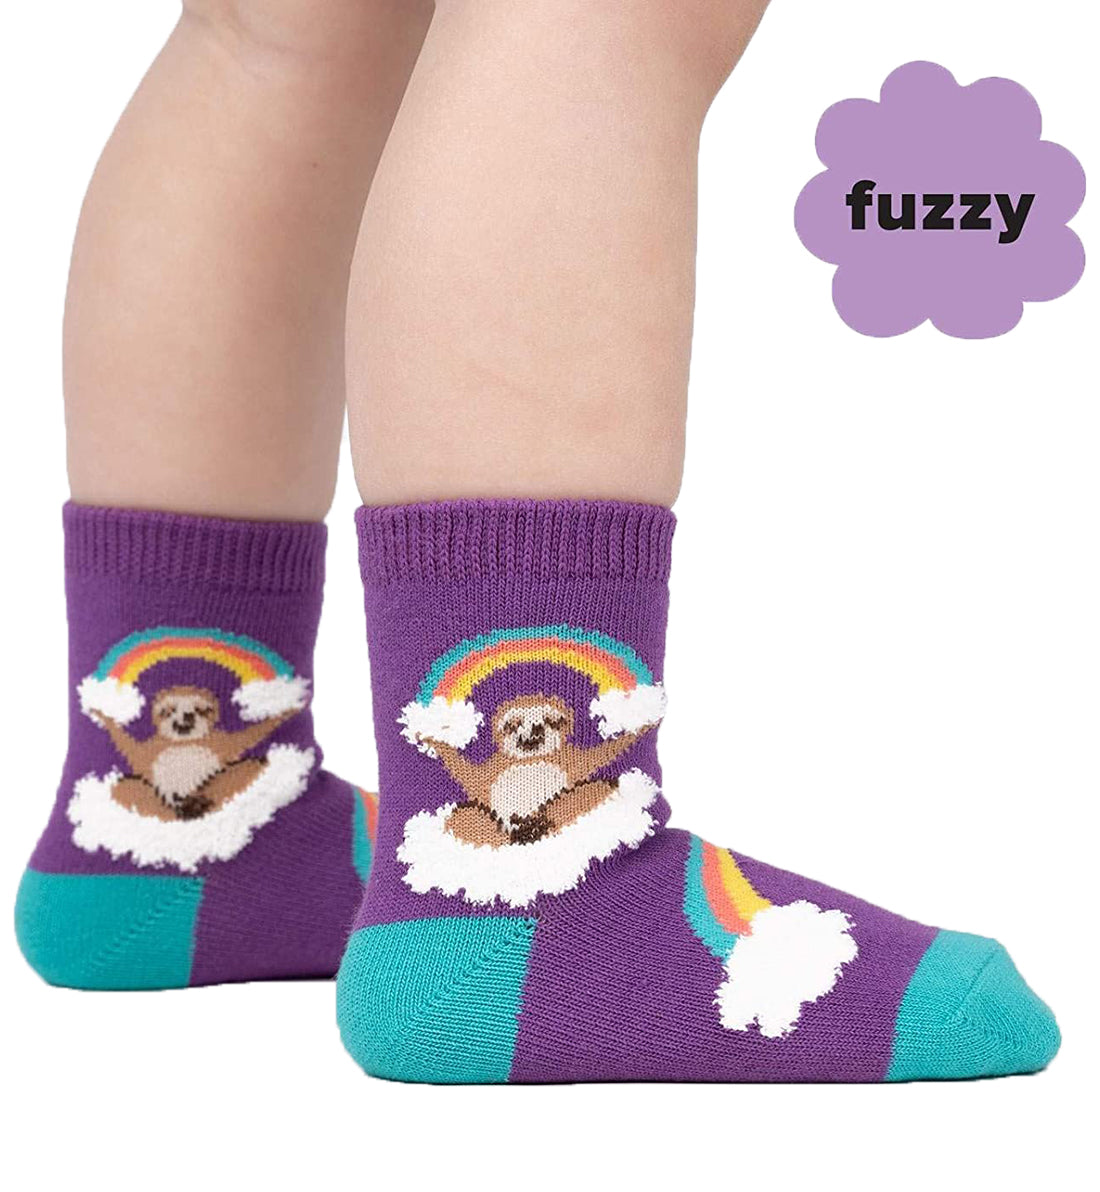 SOCK it to me Toddler Crew Socks (TC0100),Sloth Dreams (Fuzzy) - Sloth Dreams -FUZZY,One Size